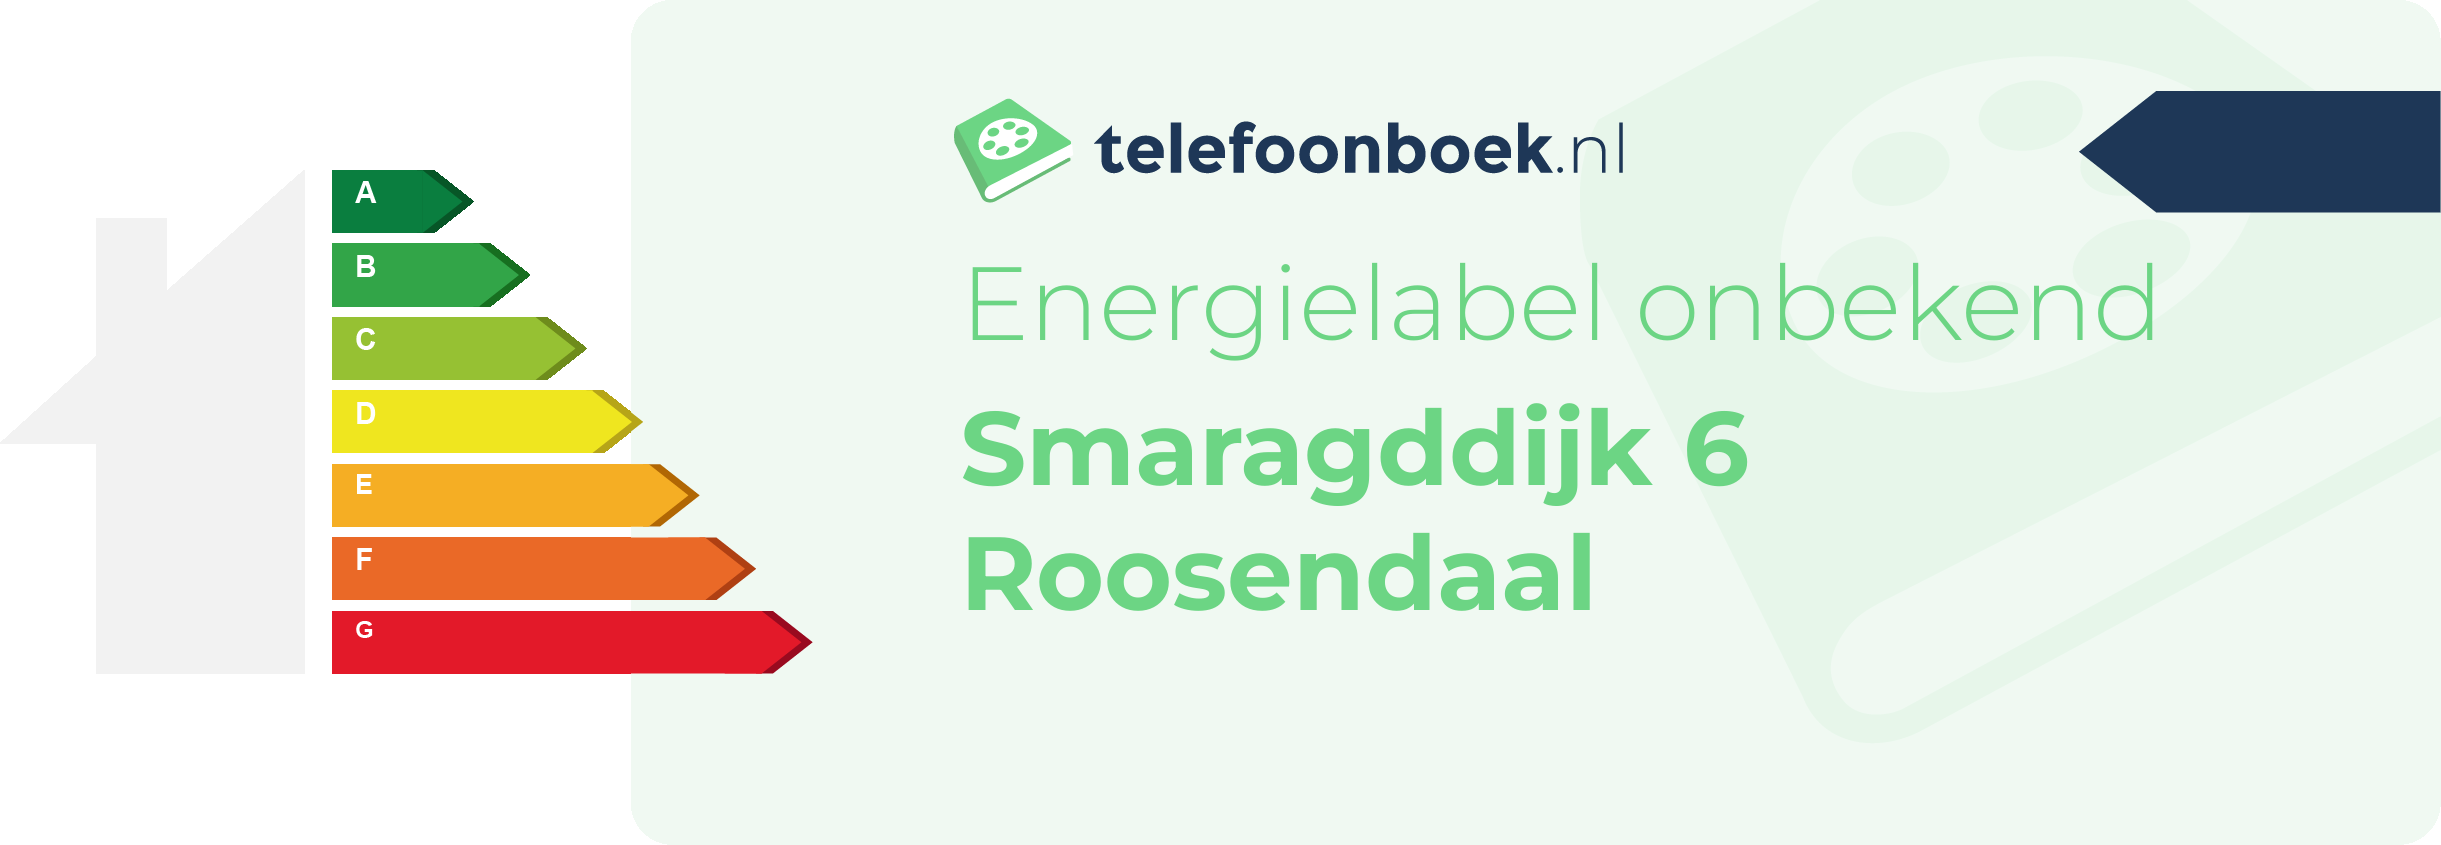 Energielabel Smaragddijk 6 Roosendaal